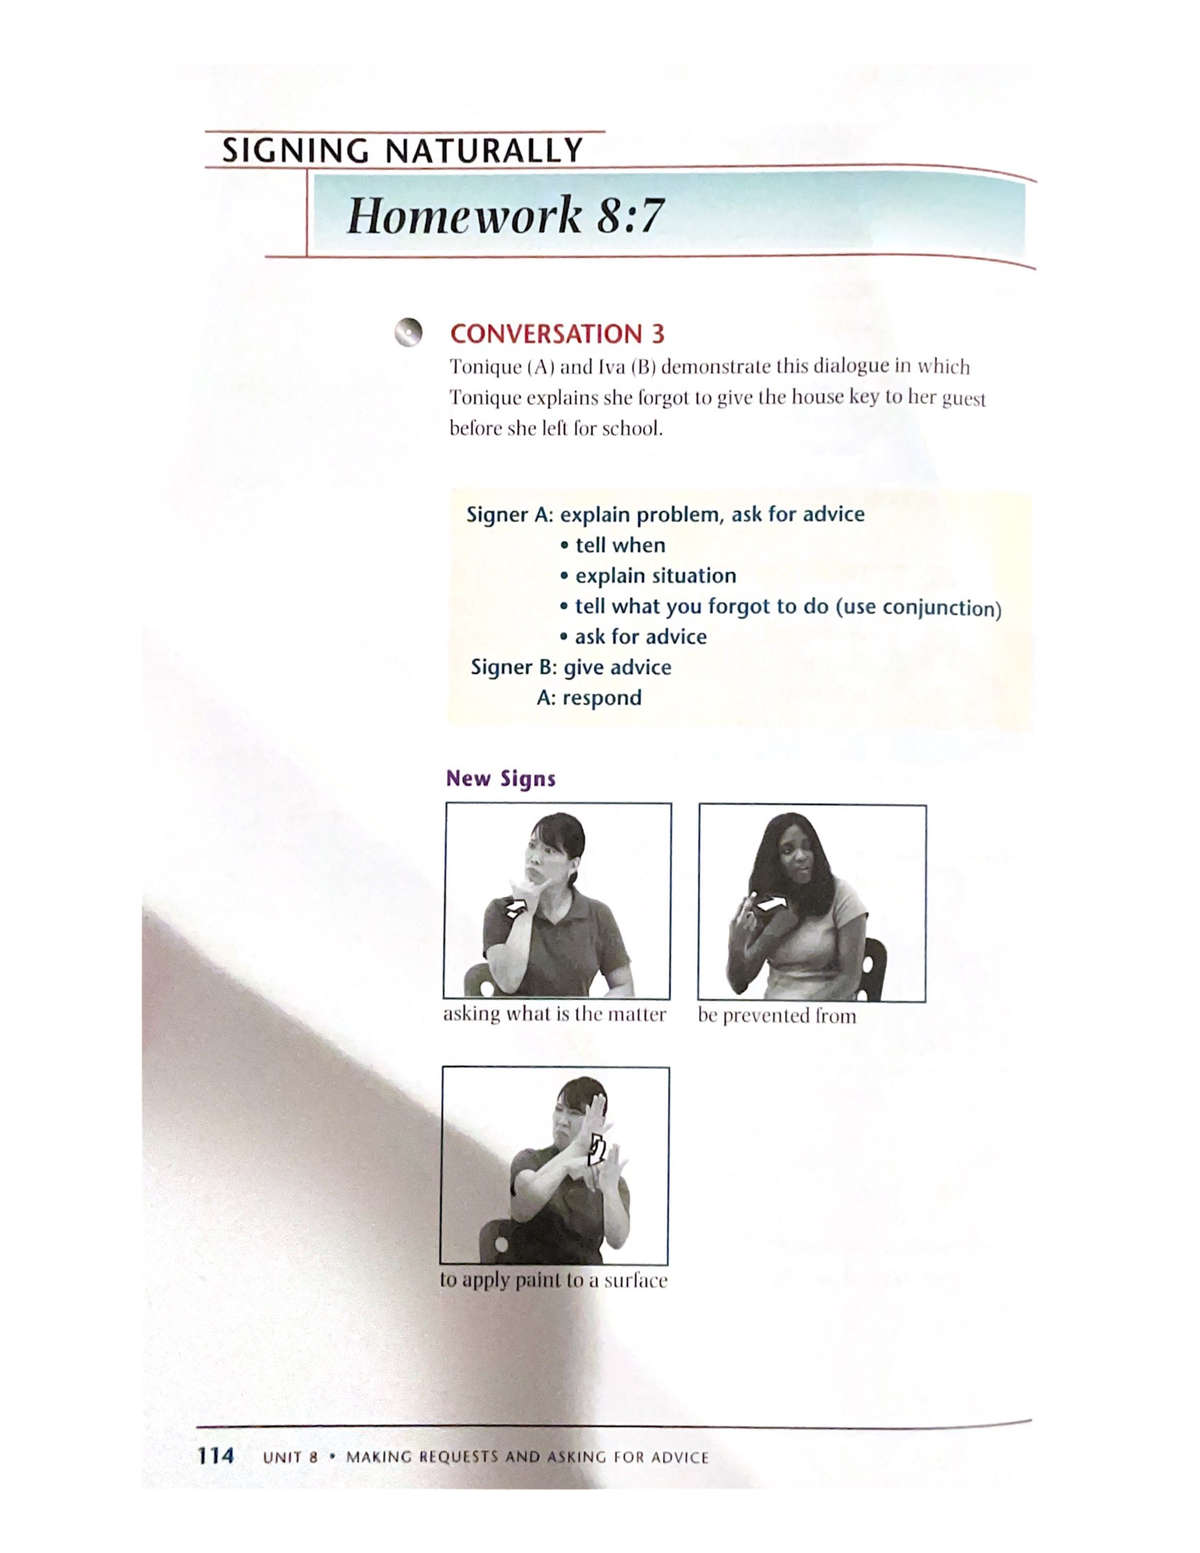 homework 7.5 asl